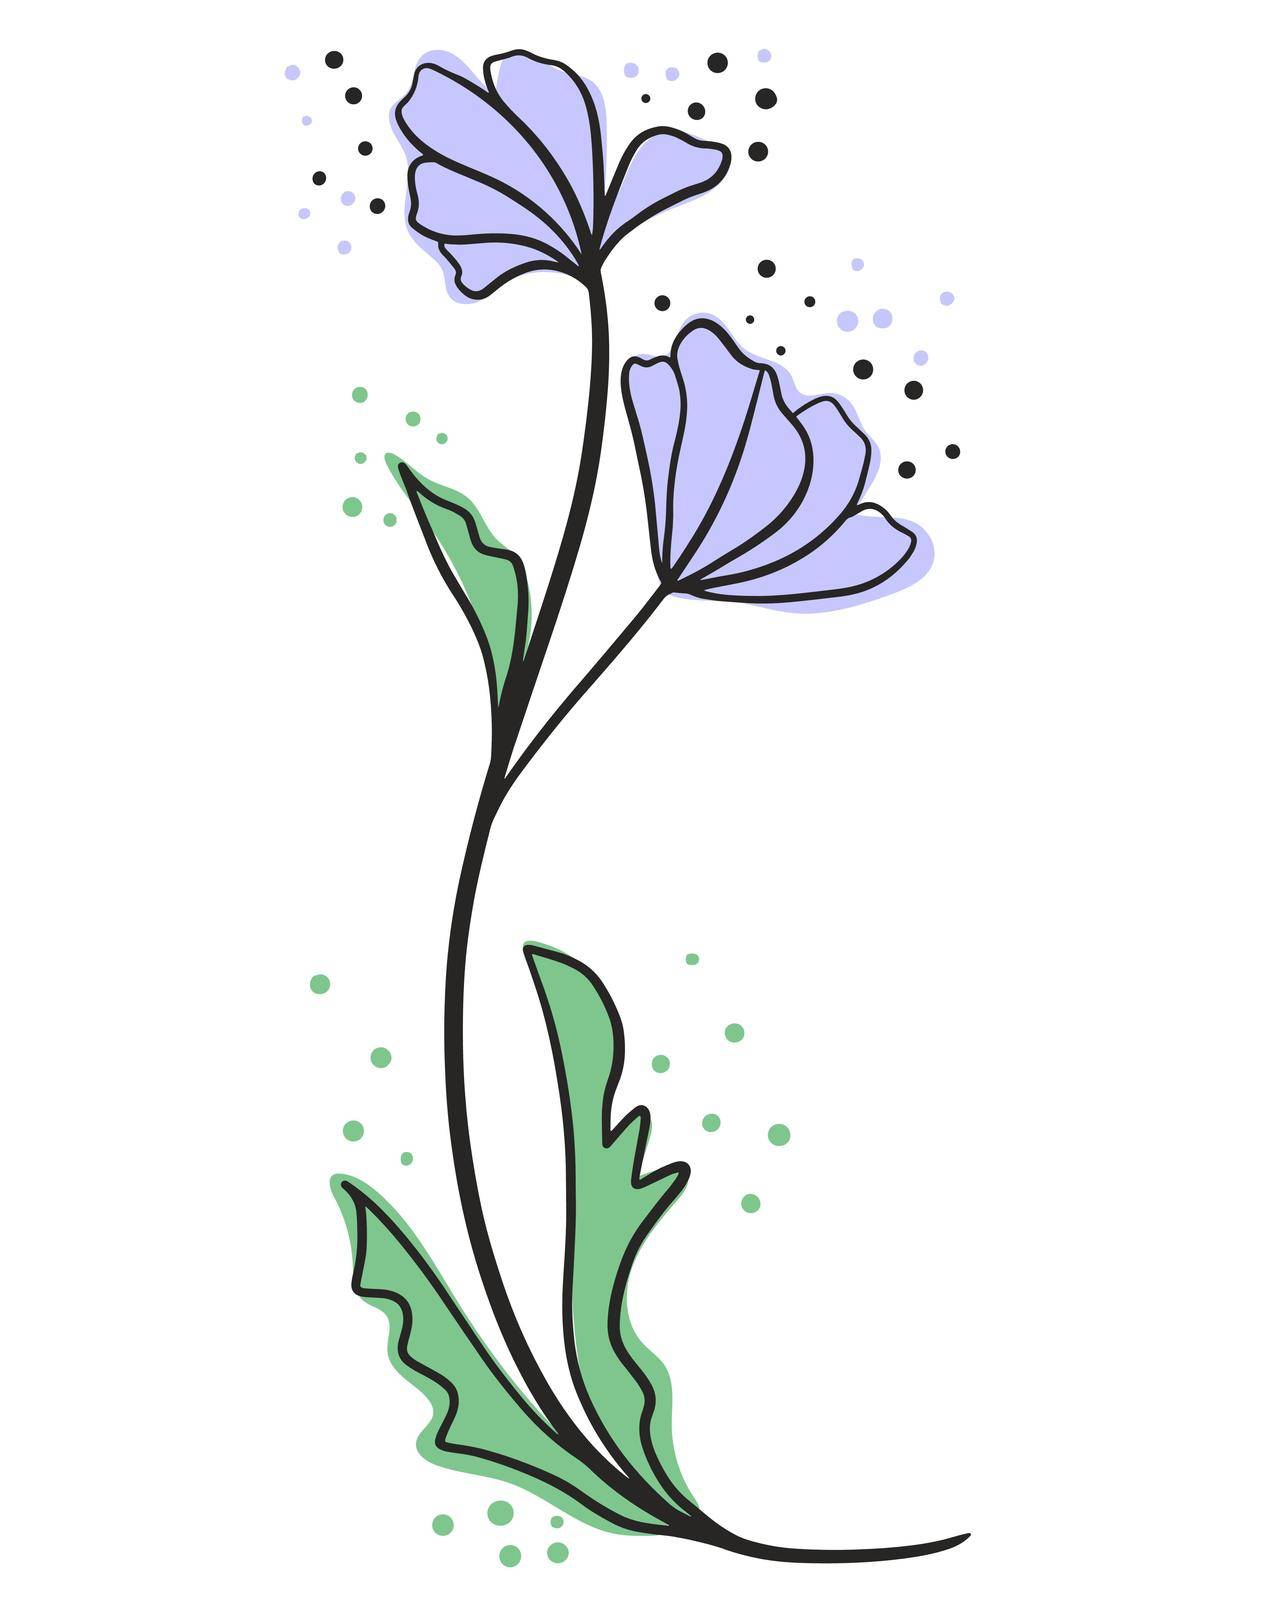 Graceful flower hand drawing vector illustration. by TassiaK